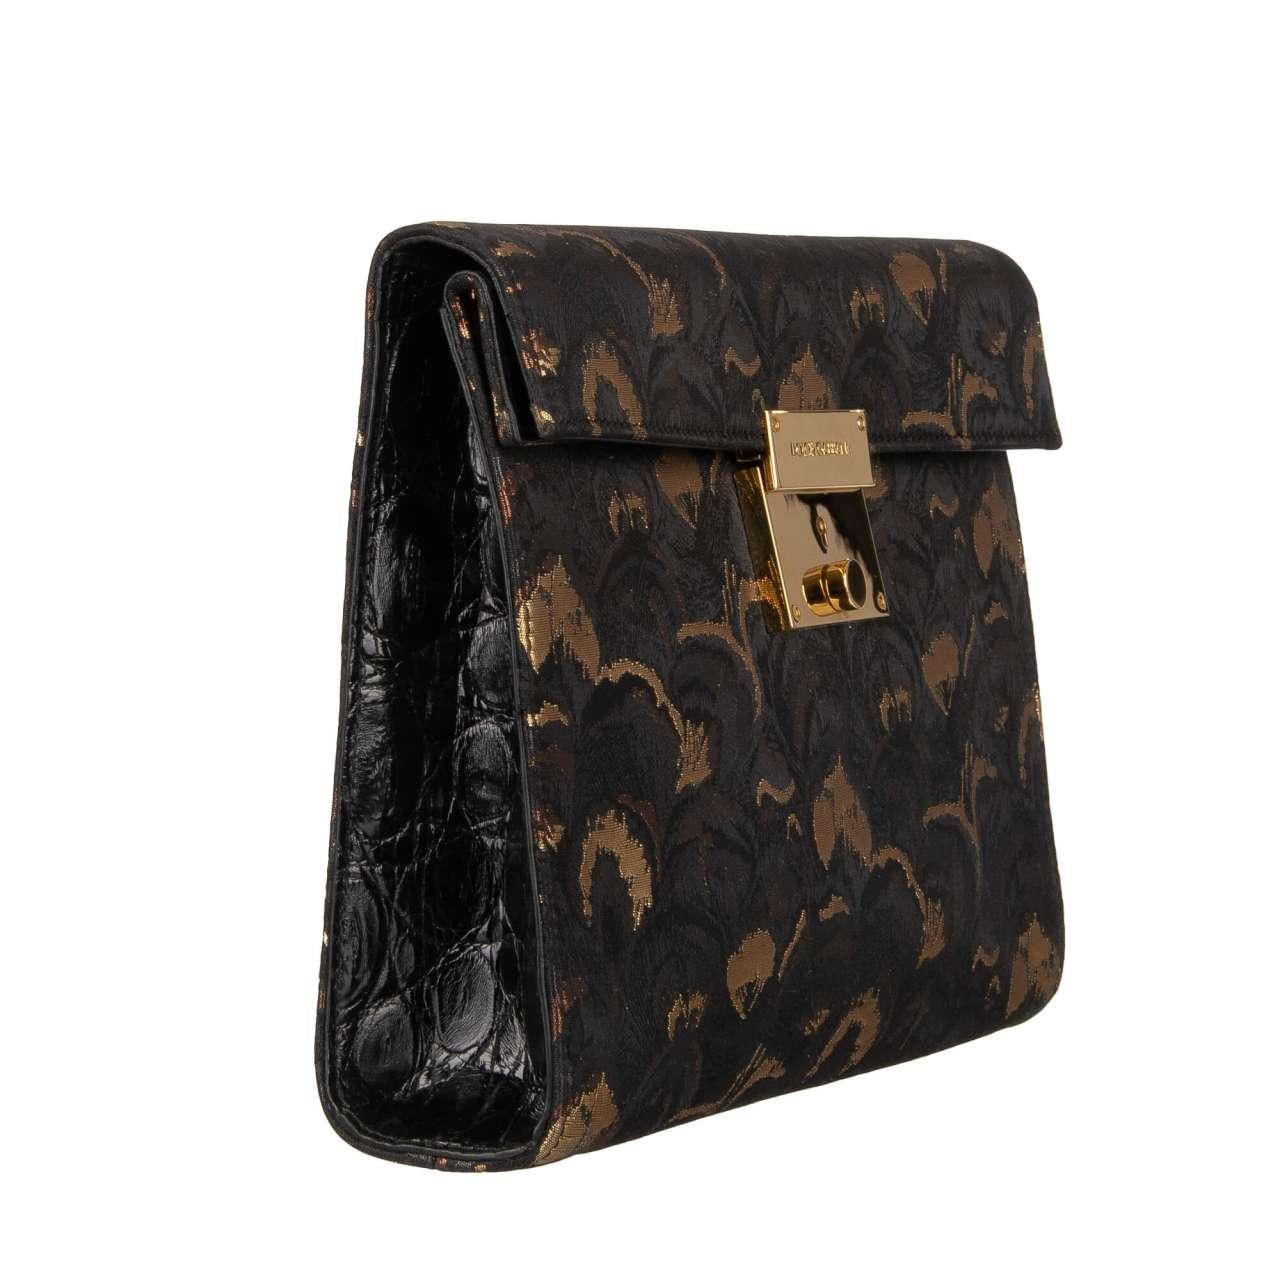 Dolce & Gabbana Textured Lurex and Caiman Leather Briefcase Bag Black Gold In Excellent Condition For Sale In Erkrath, DE